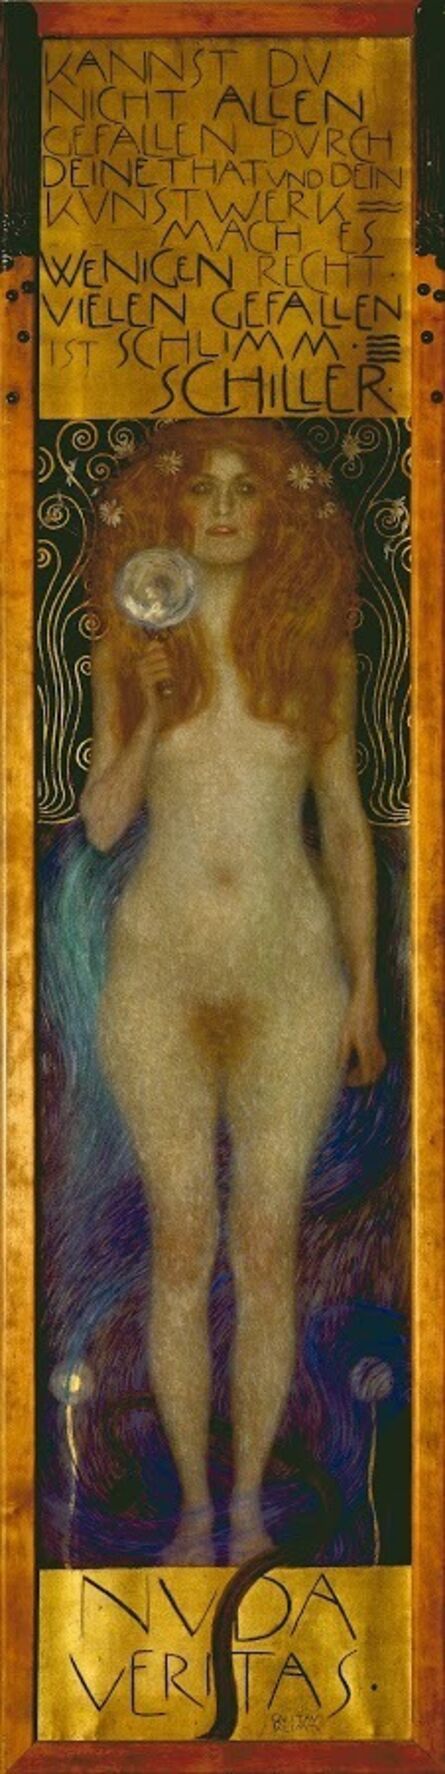 Gustav Klimt, ‘Nuda Veritas’, 1897